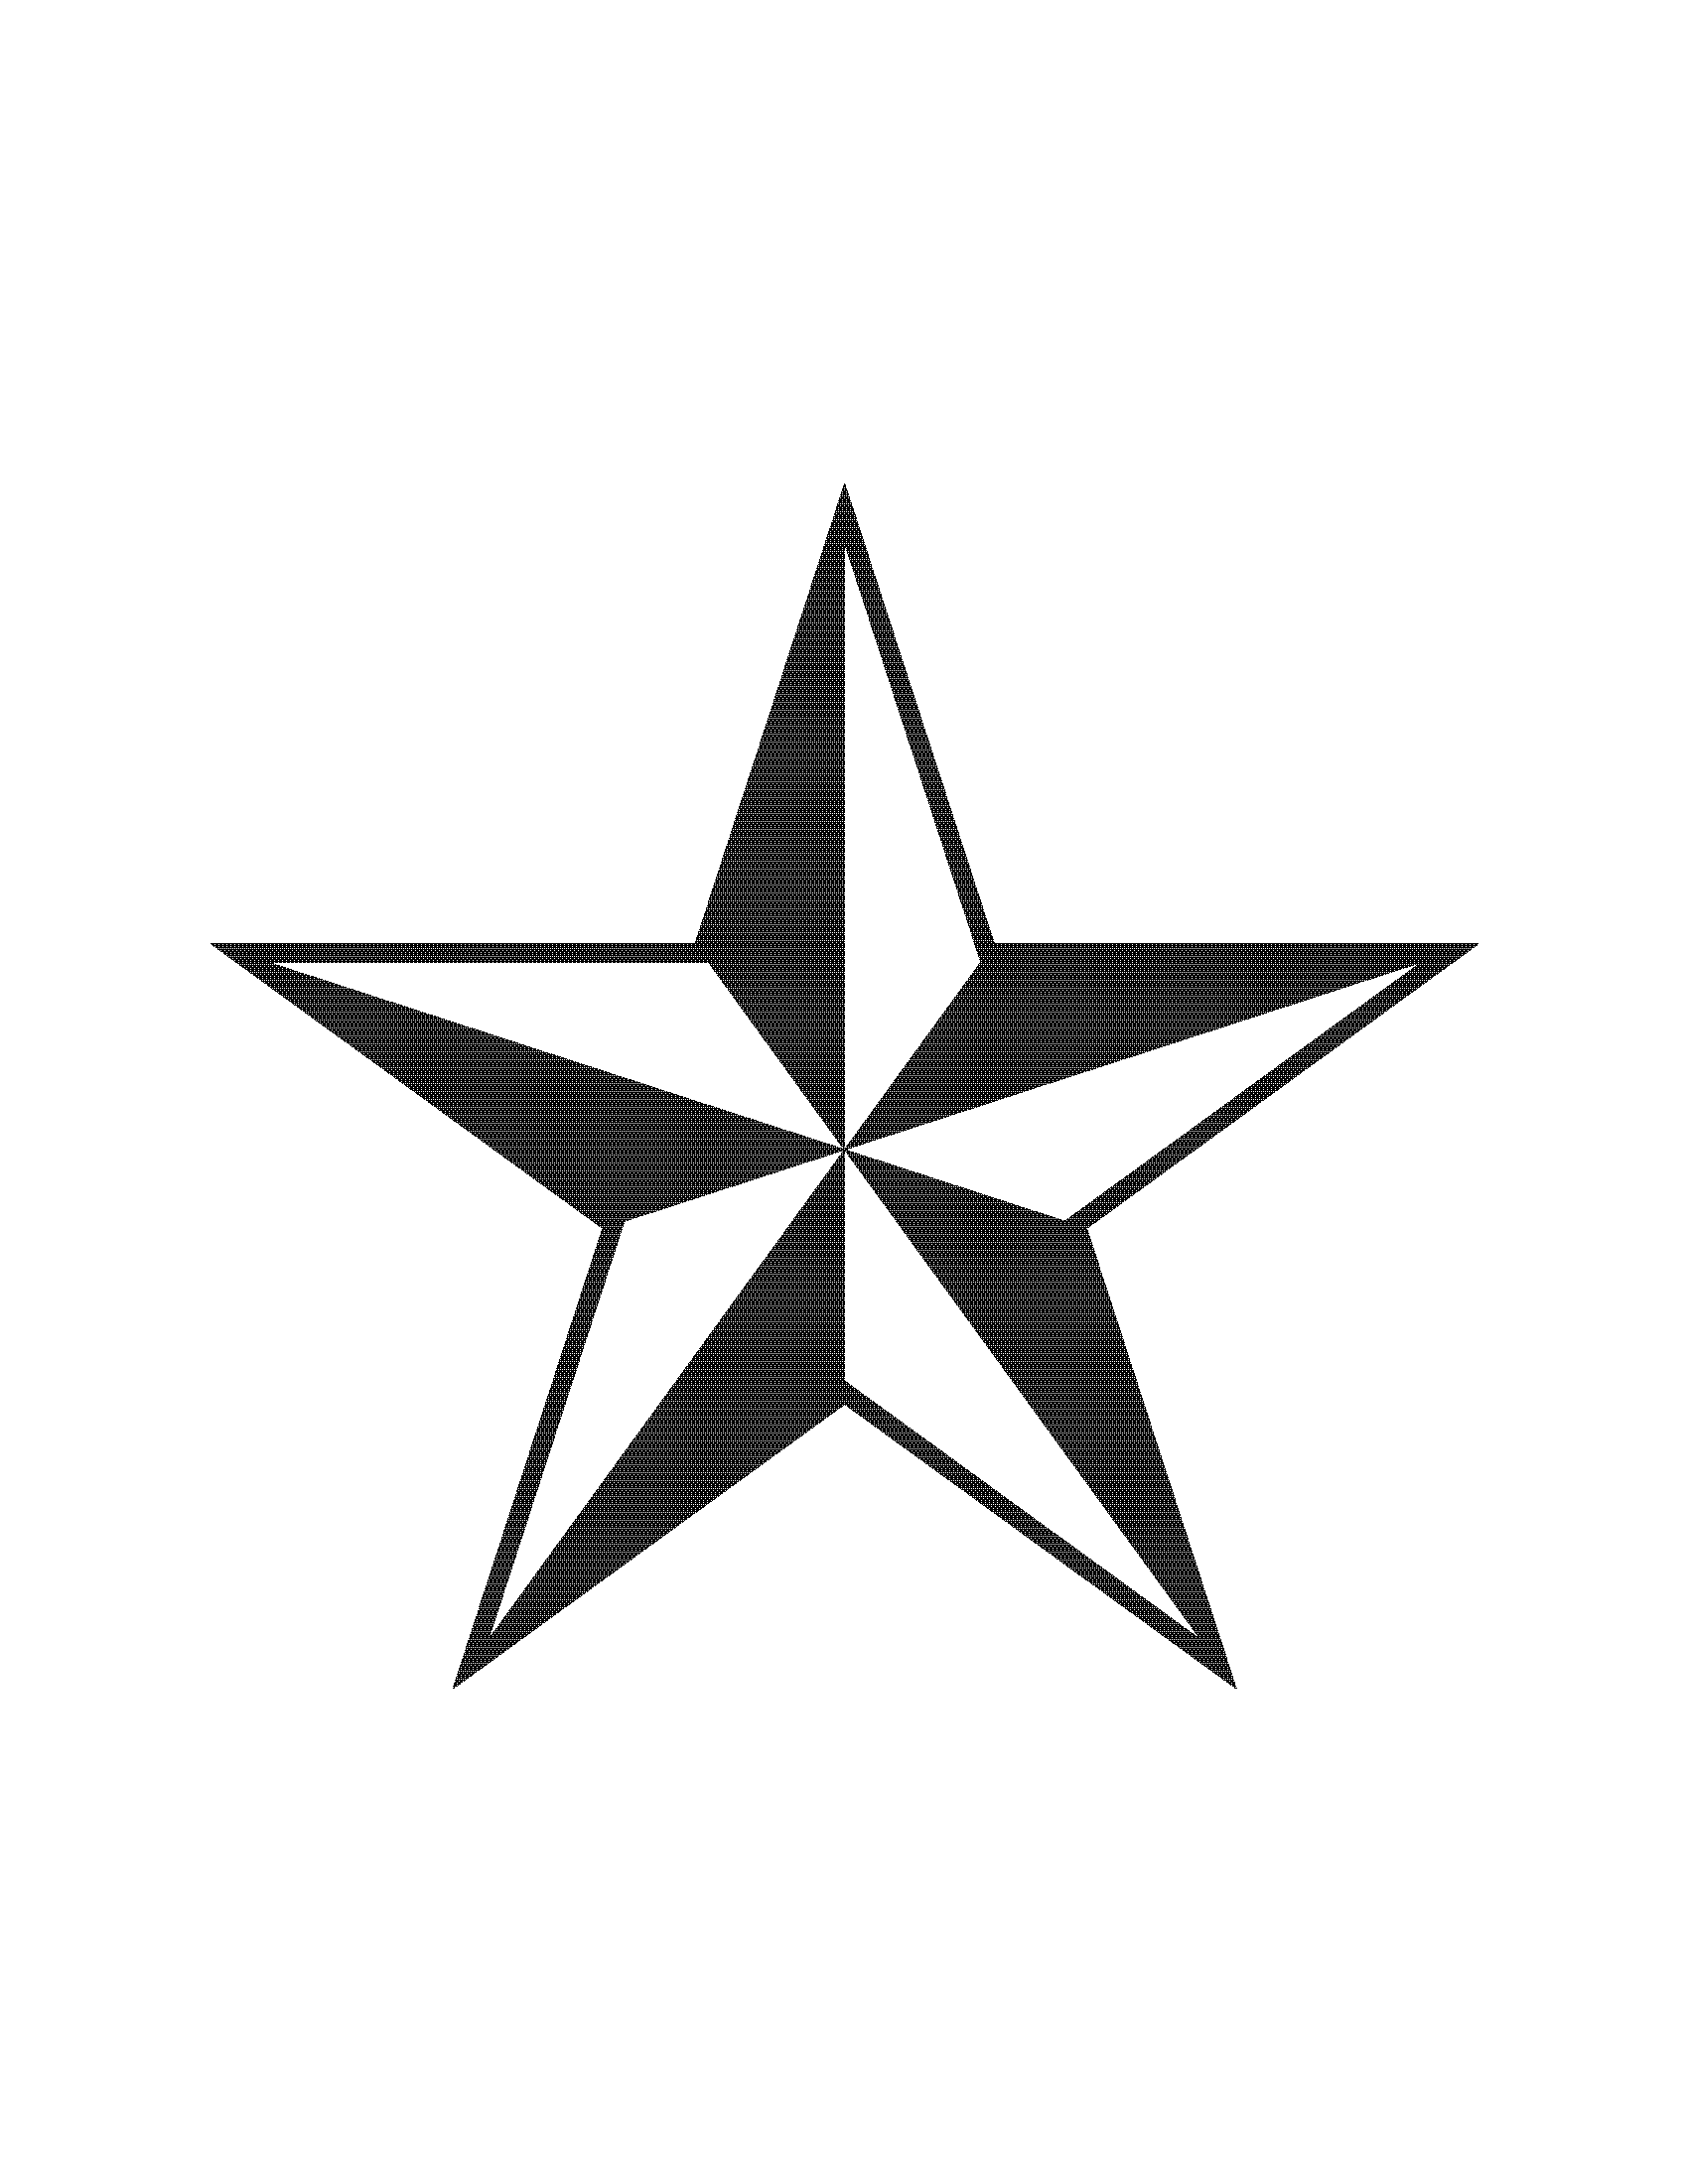 Texas Star Logo - Texas Star Clip Art | paper crafts & Silhouette in 2019 | Pinterest ...